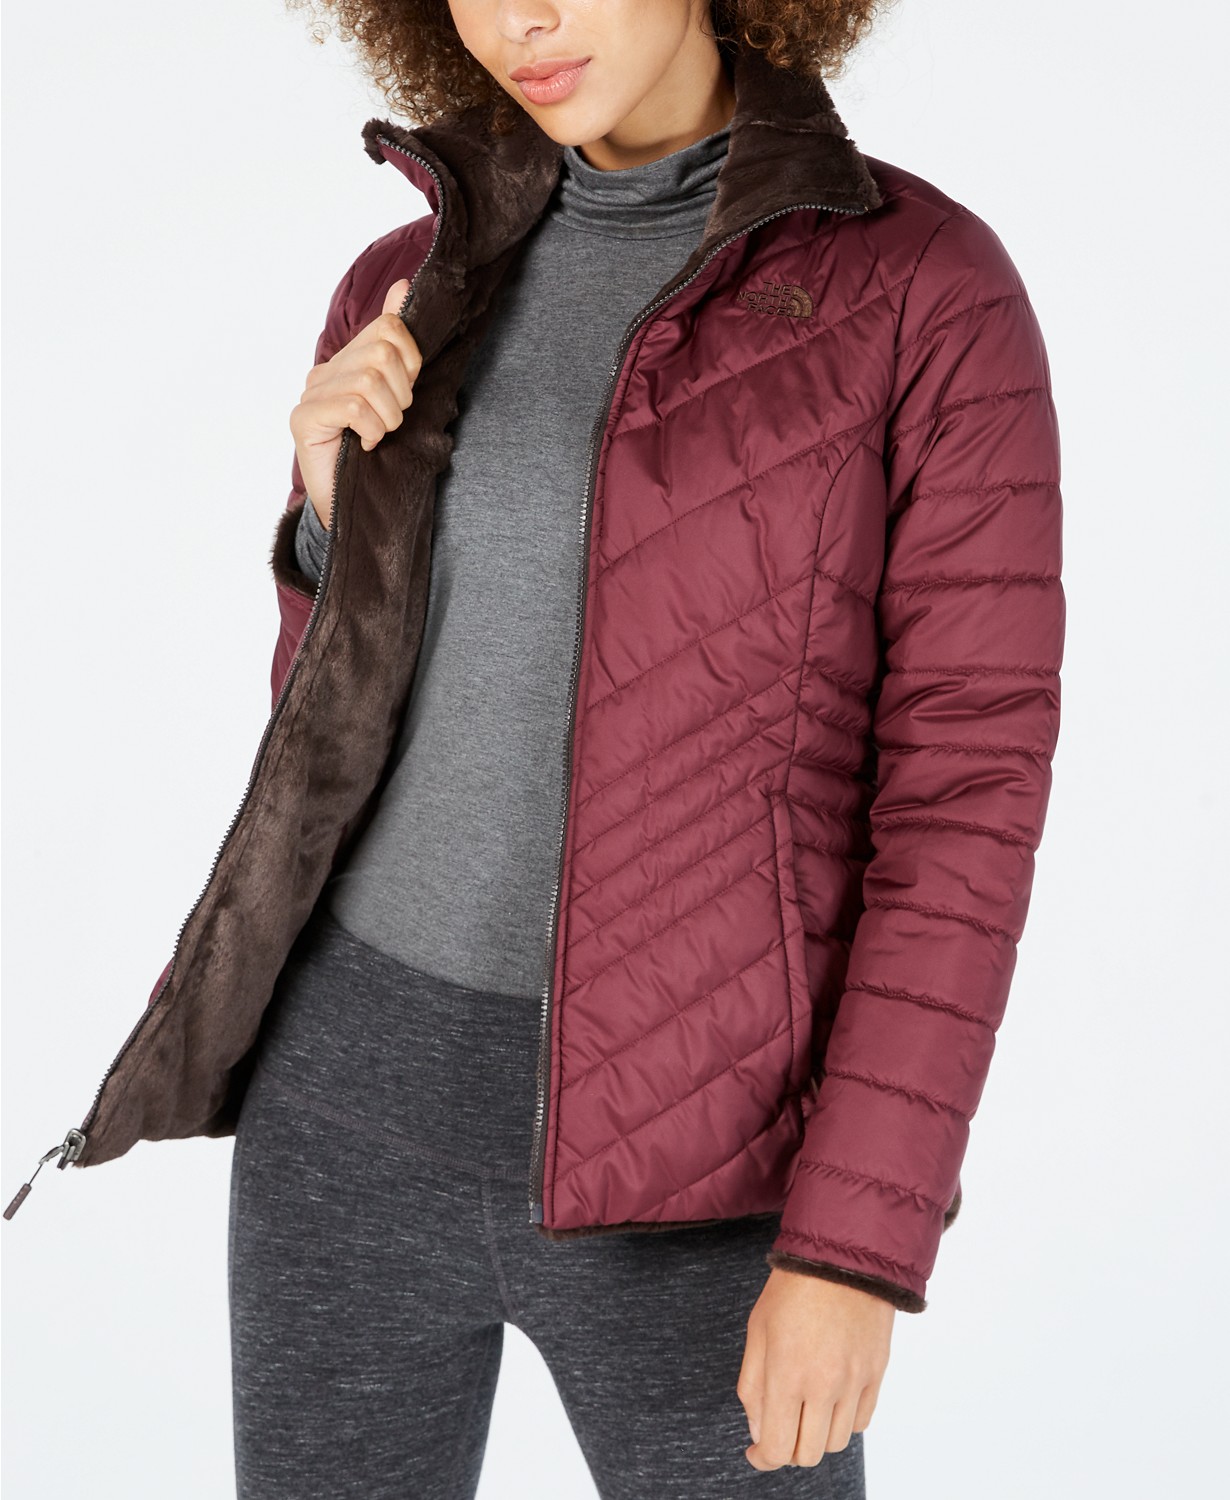 north face women's fleece lined jacket